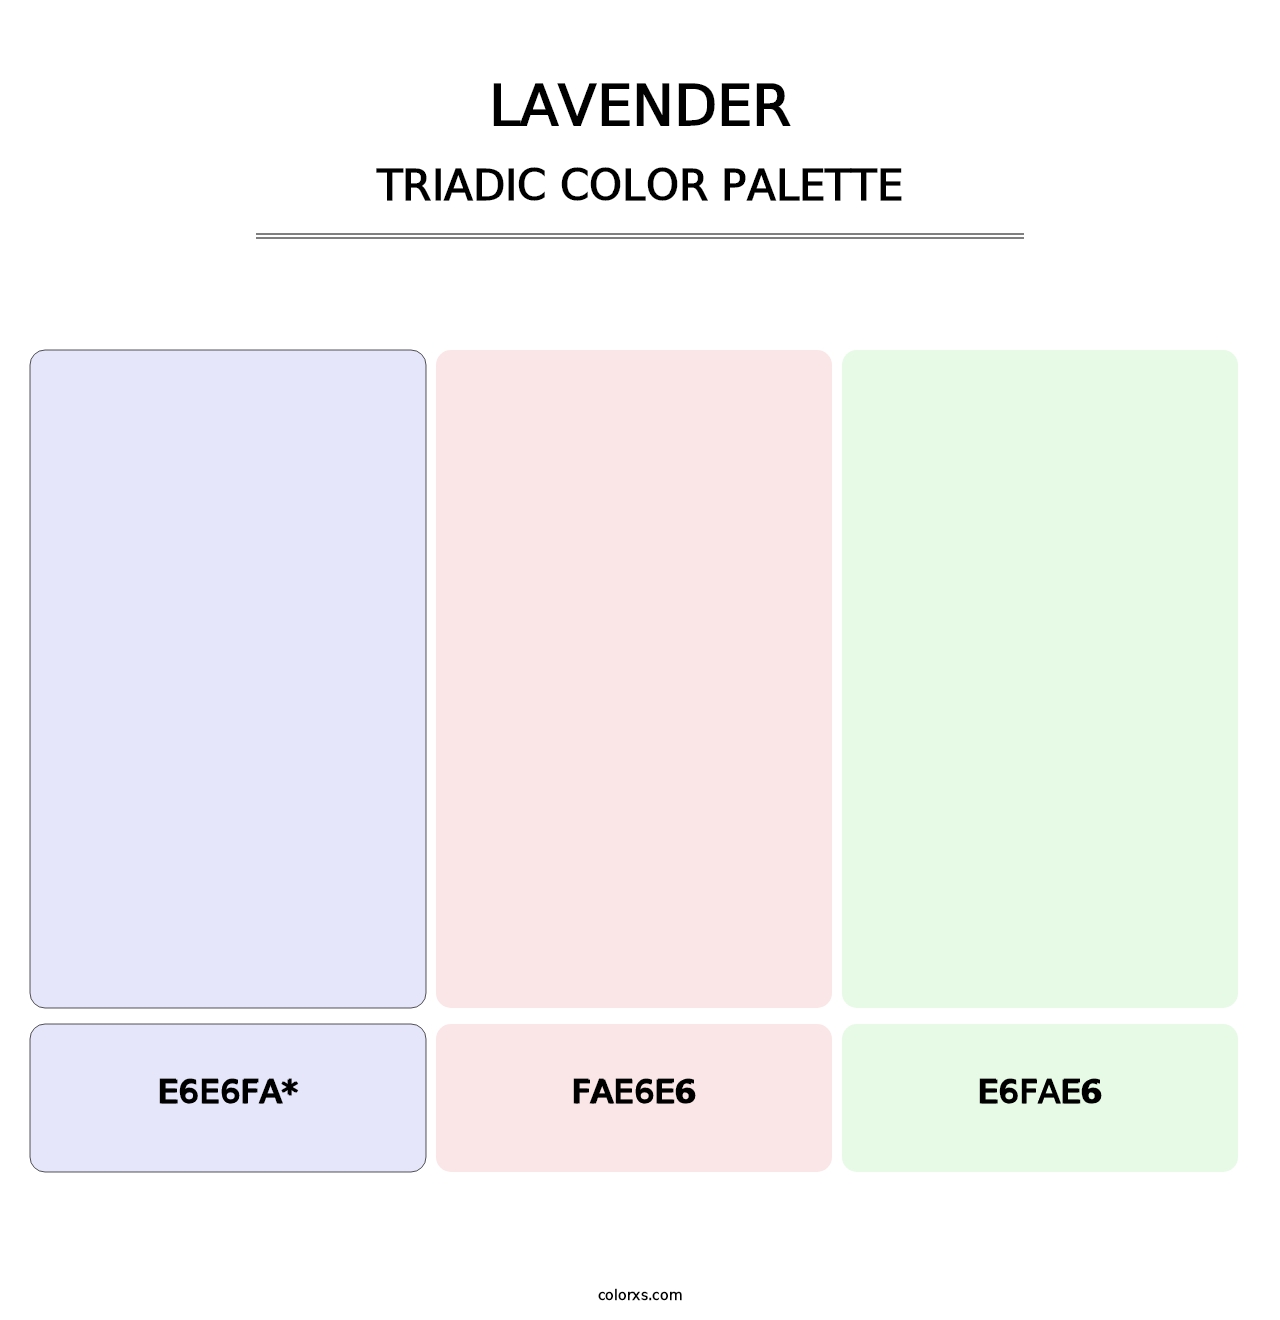 Lavender - Triadic Color Palette